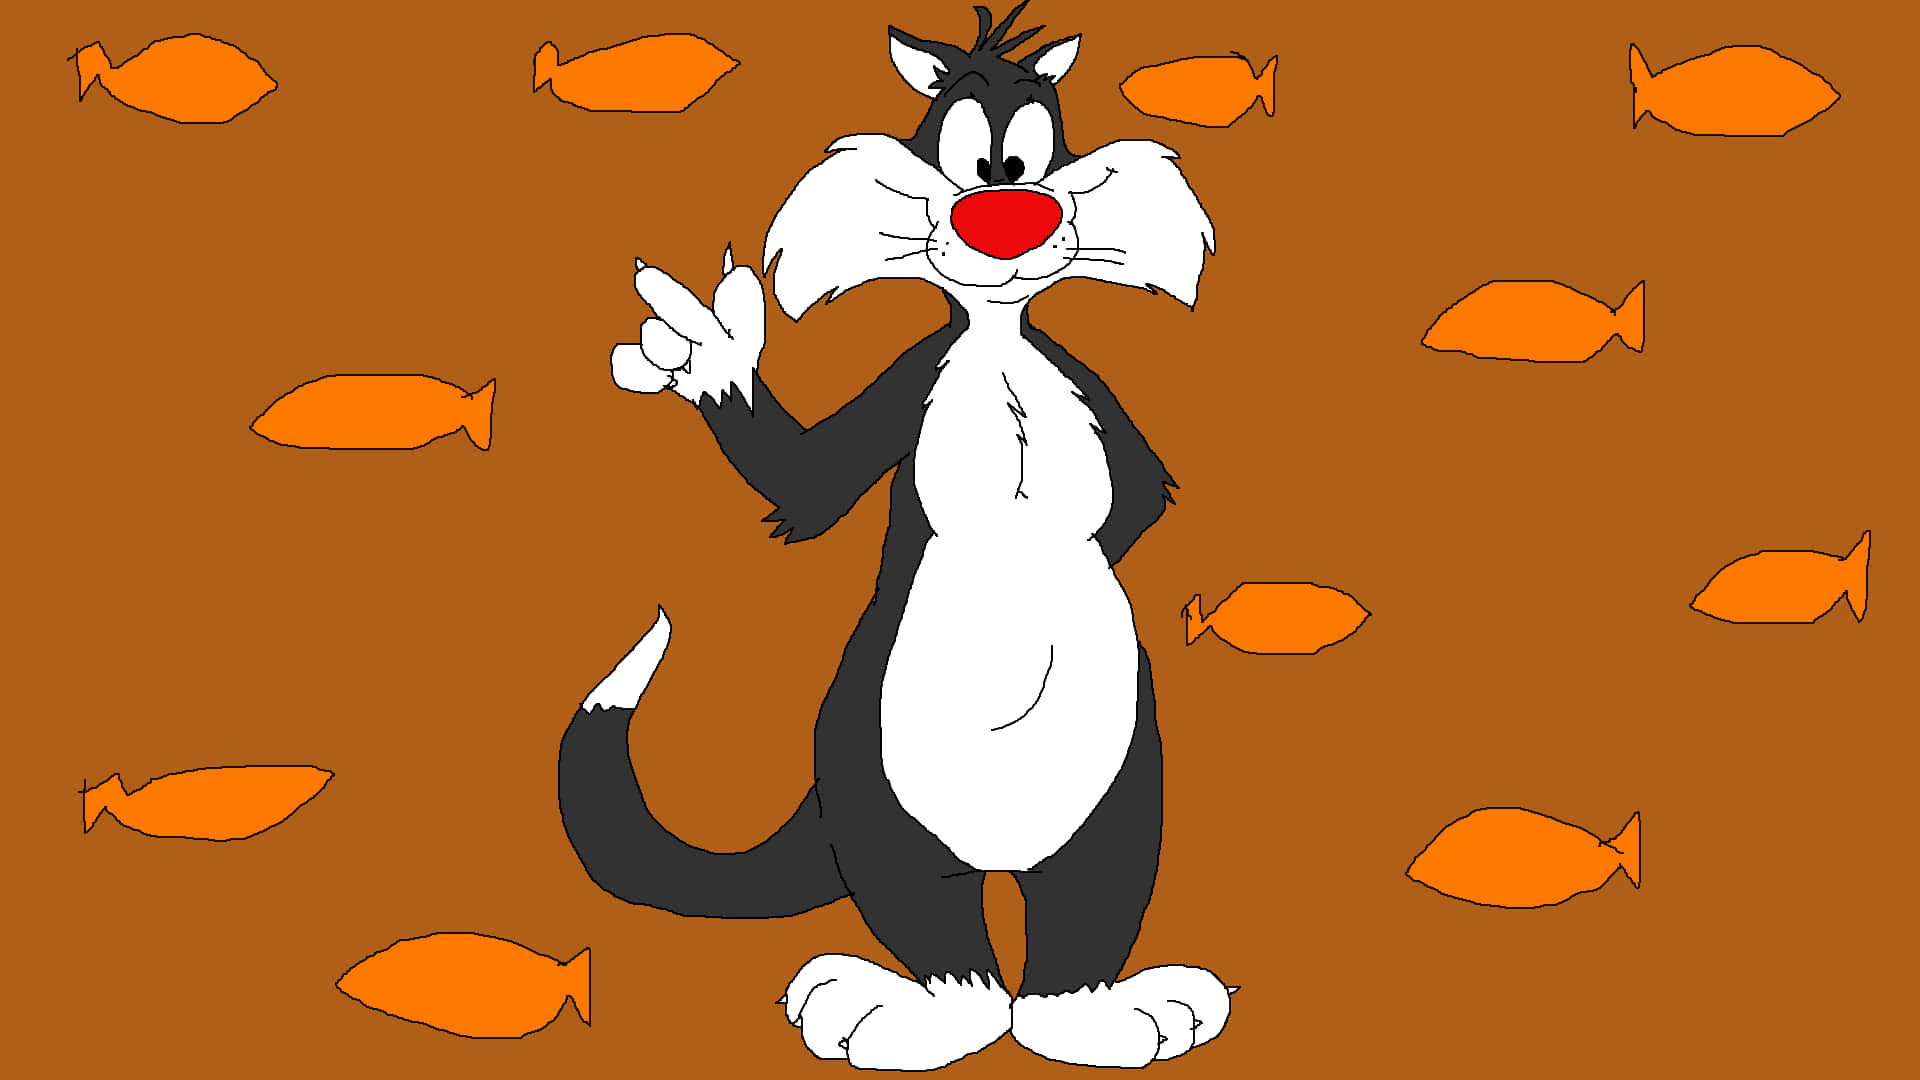 "Sylvester The Cat - having lots of fun!"